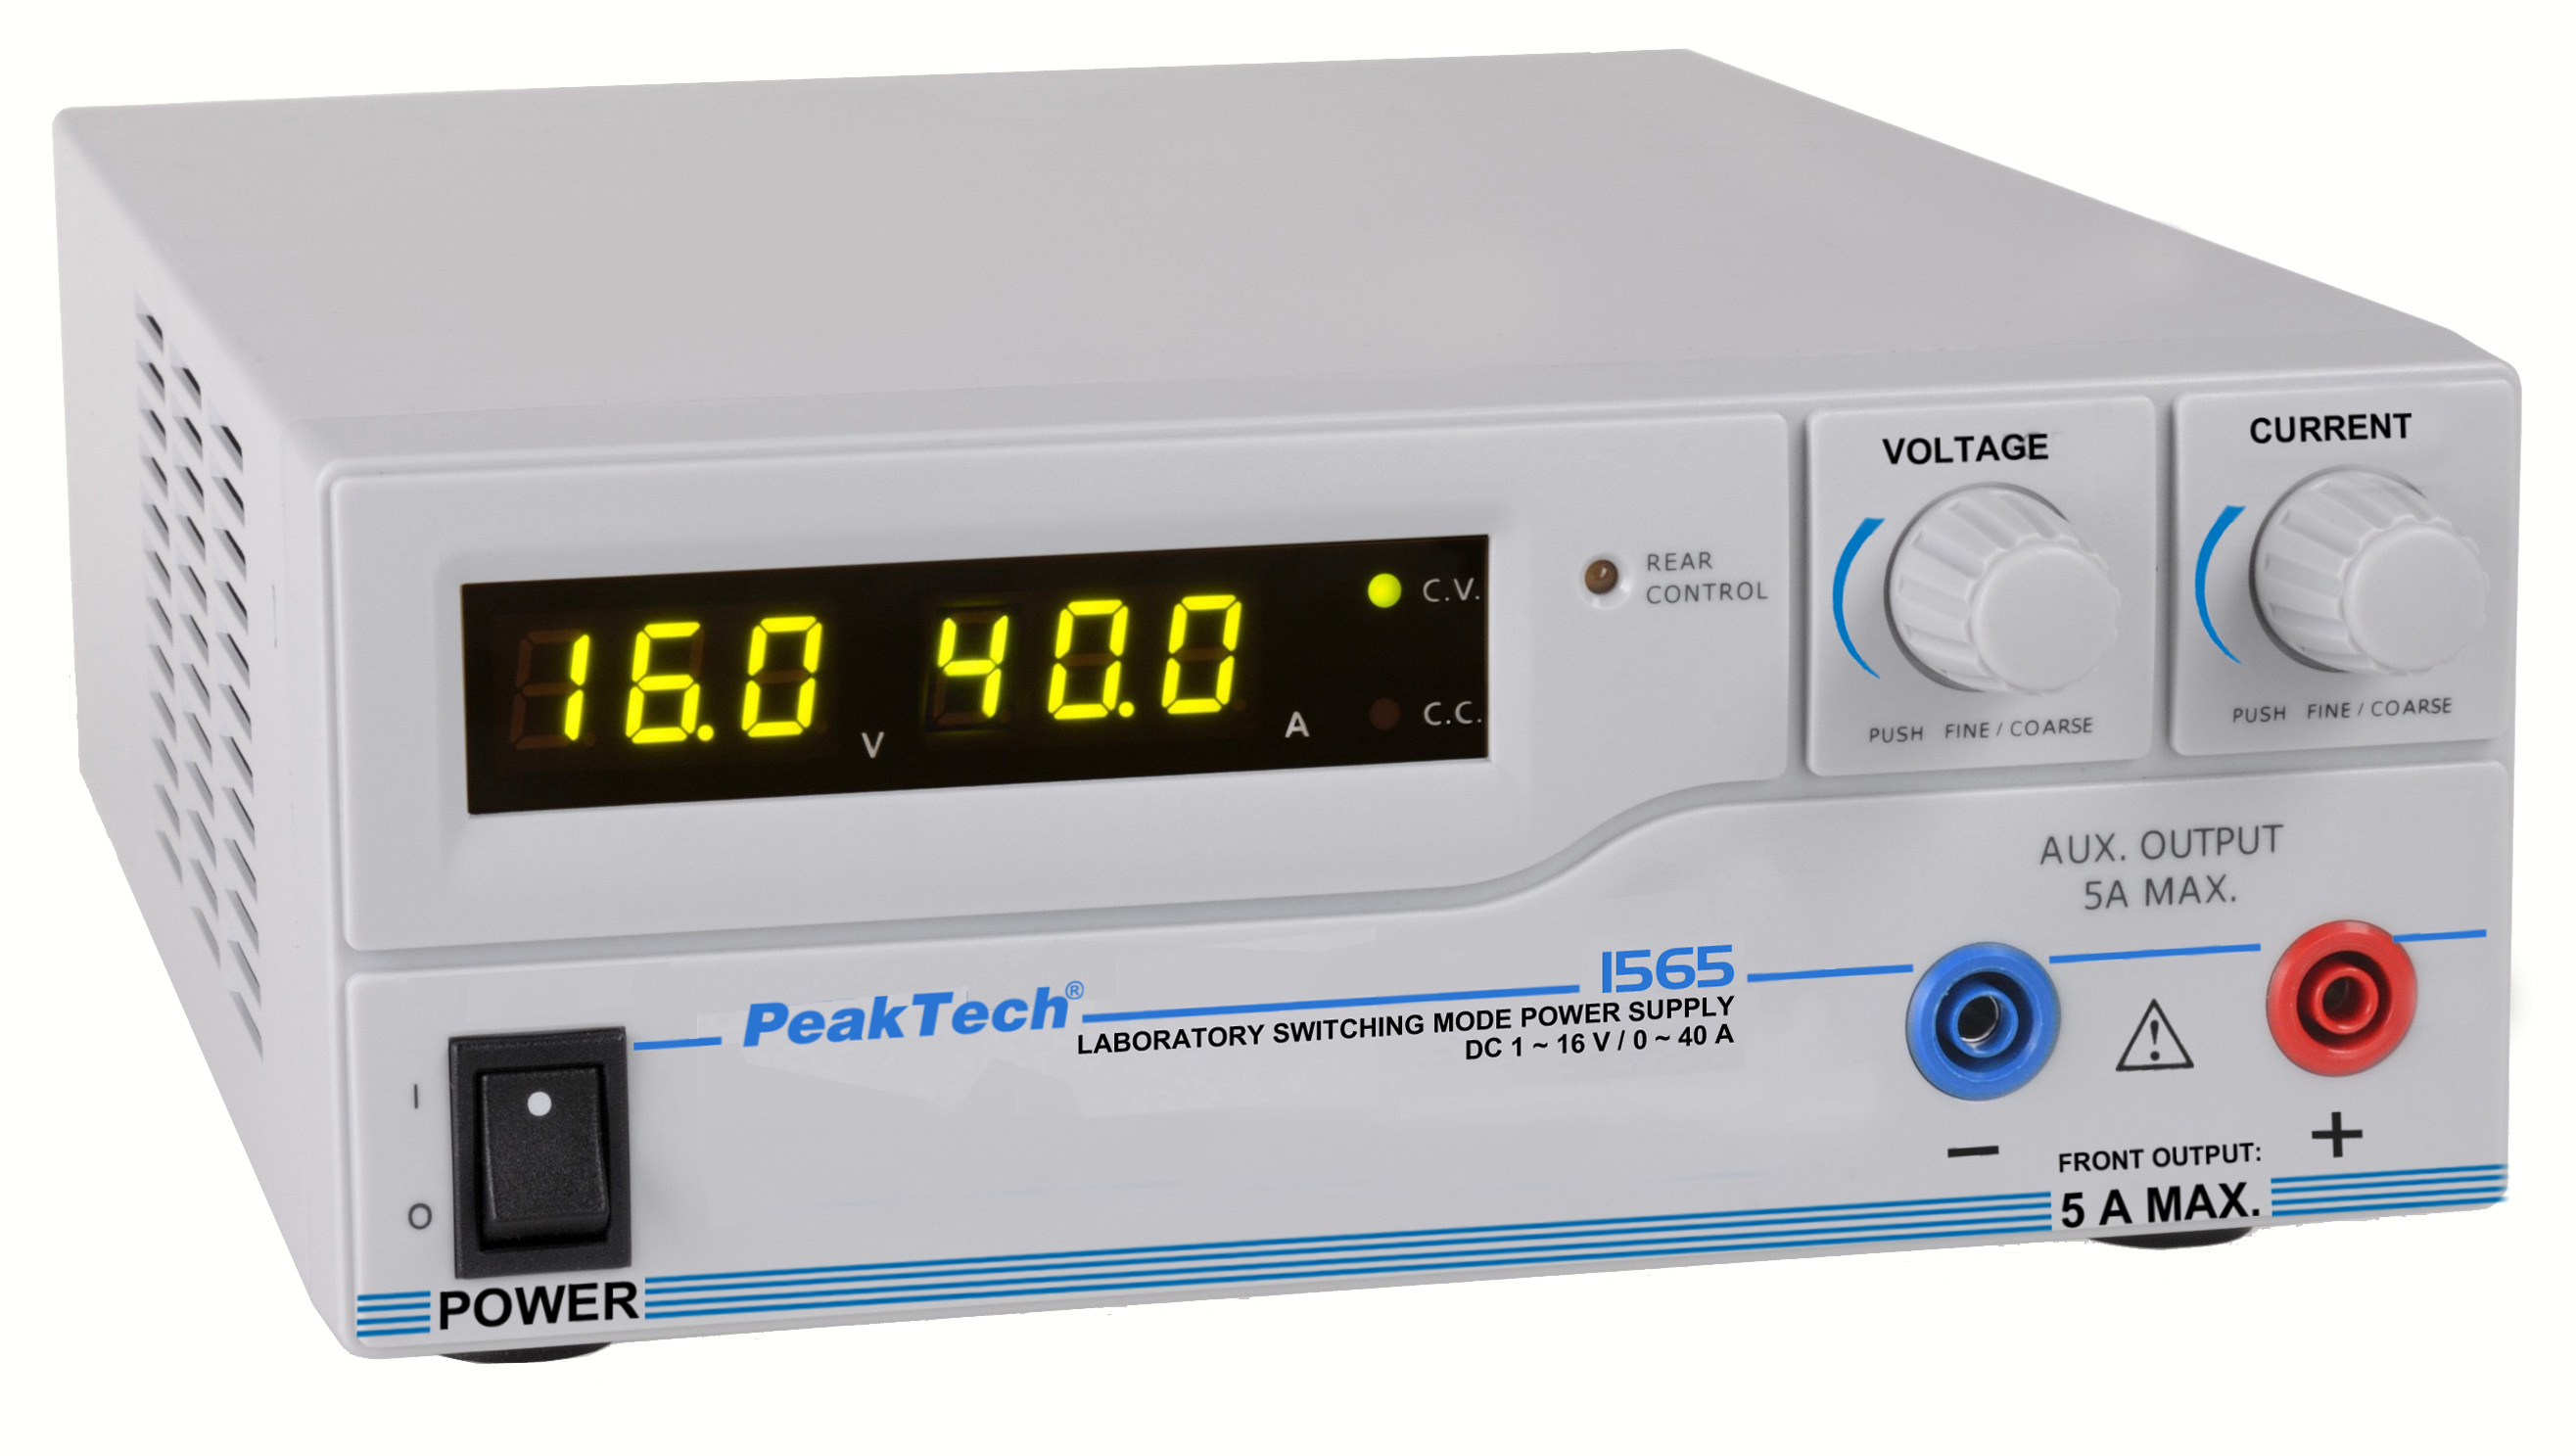 «PeakTech® P 1565» Laboratory power supply DC 1 - 16V/0 - 40A & USB